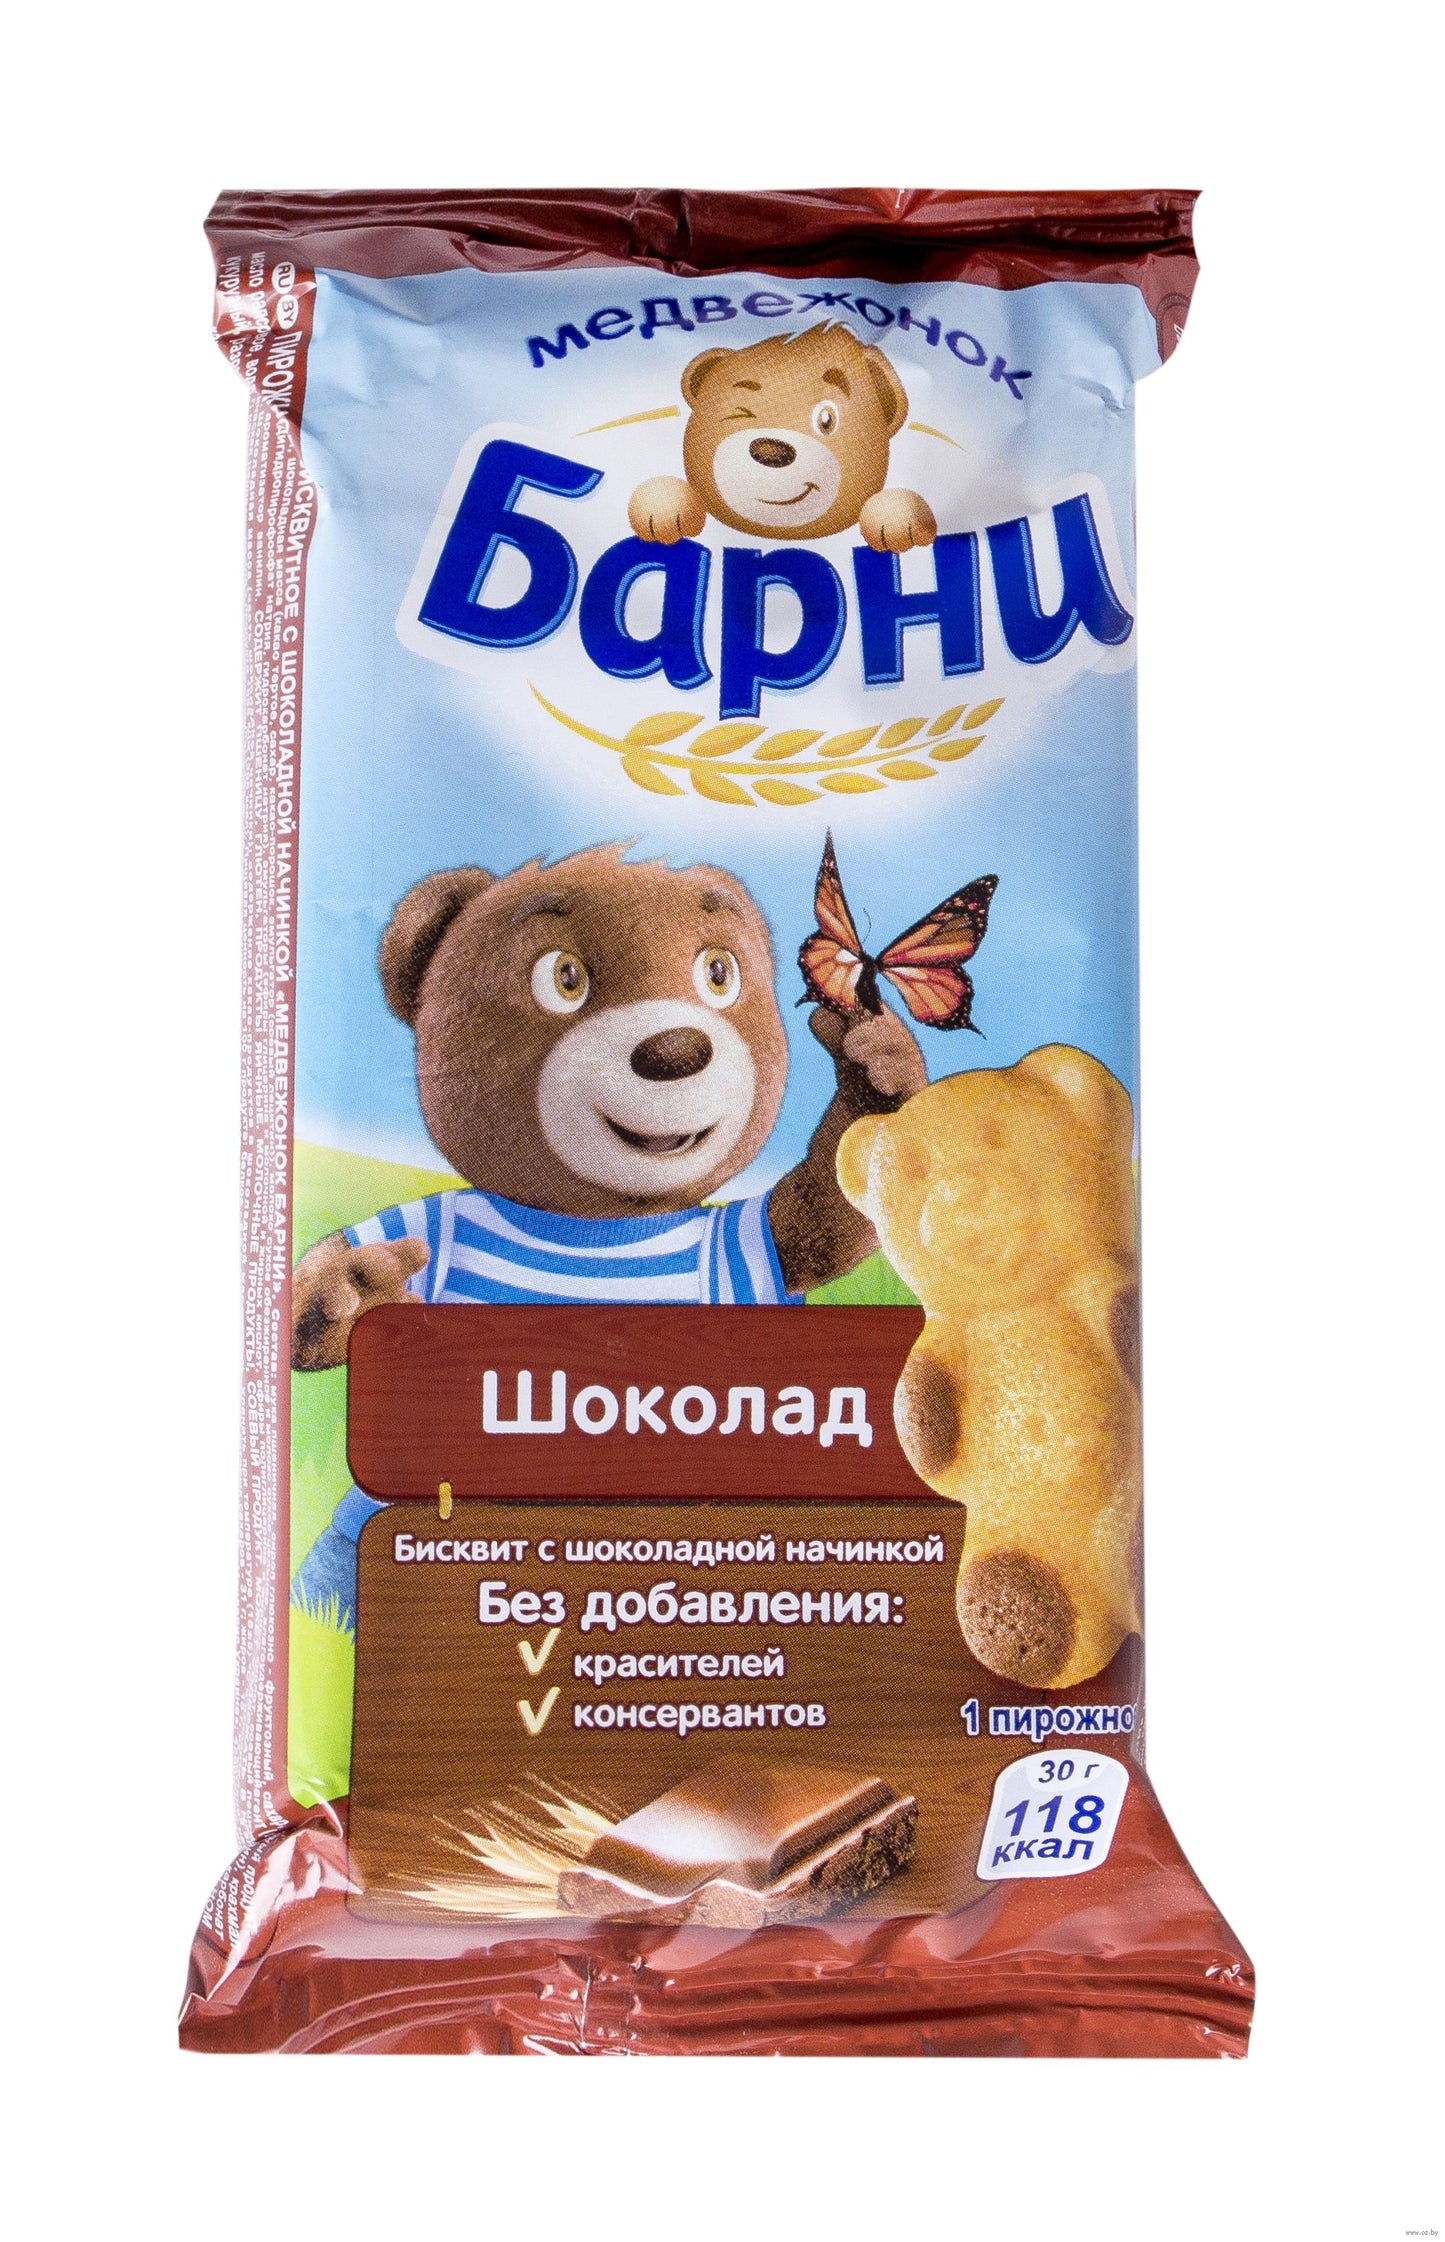 Bear cub Barni with chocolate filling 30g Ukraine